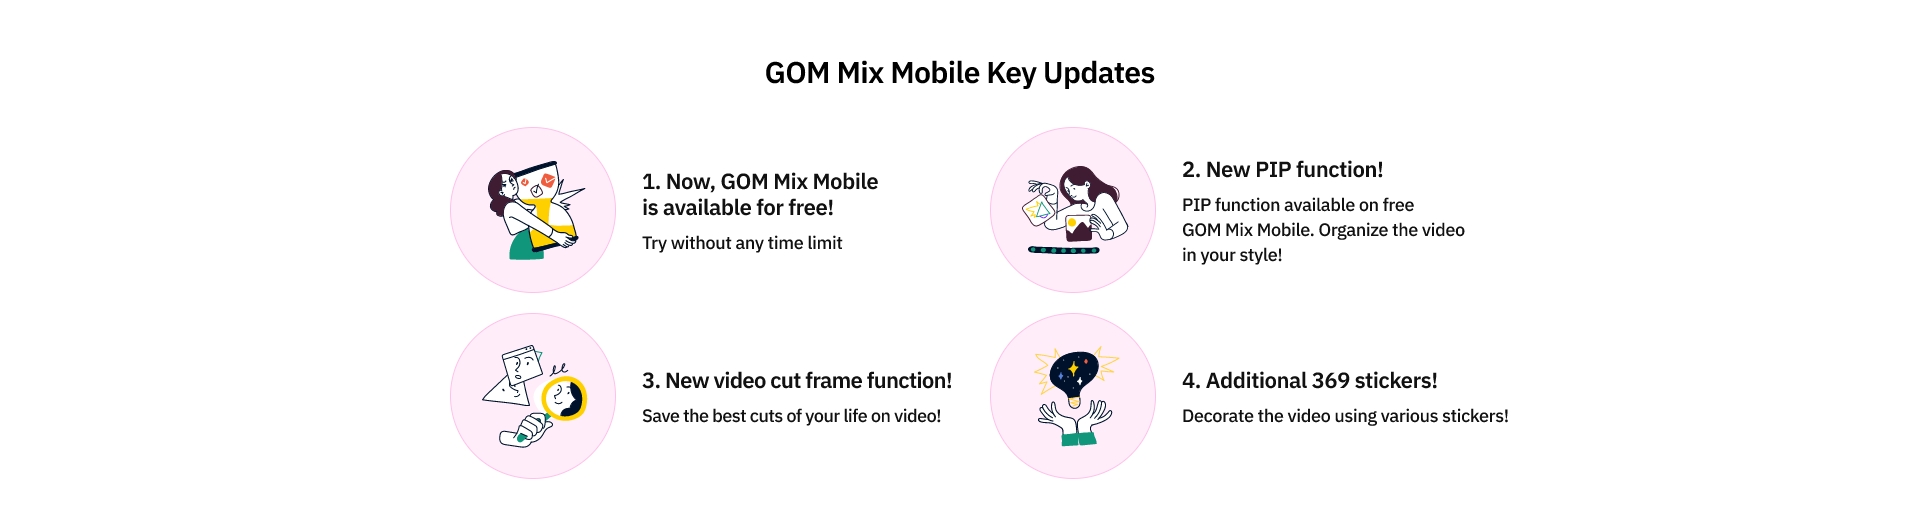 GOM Mix Mobile Key Updates Info Image